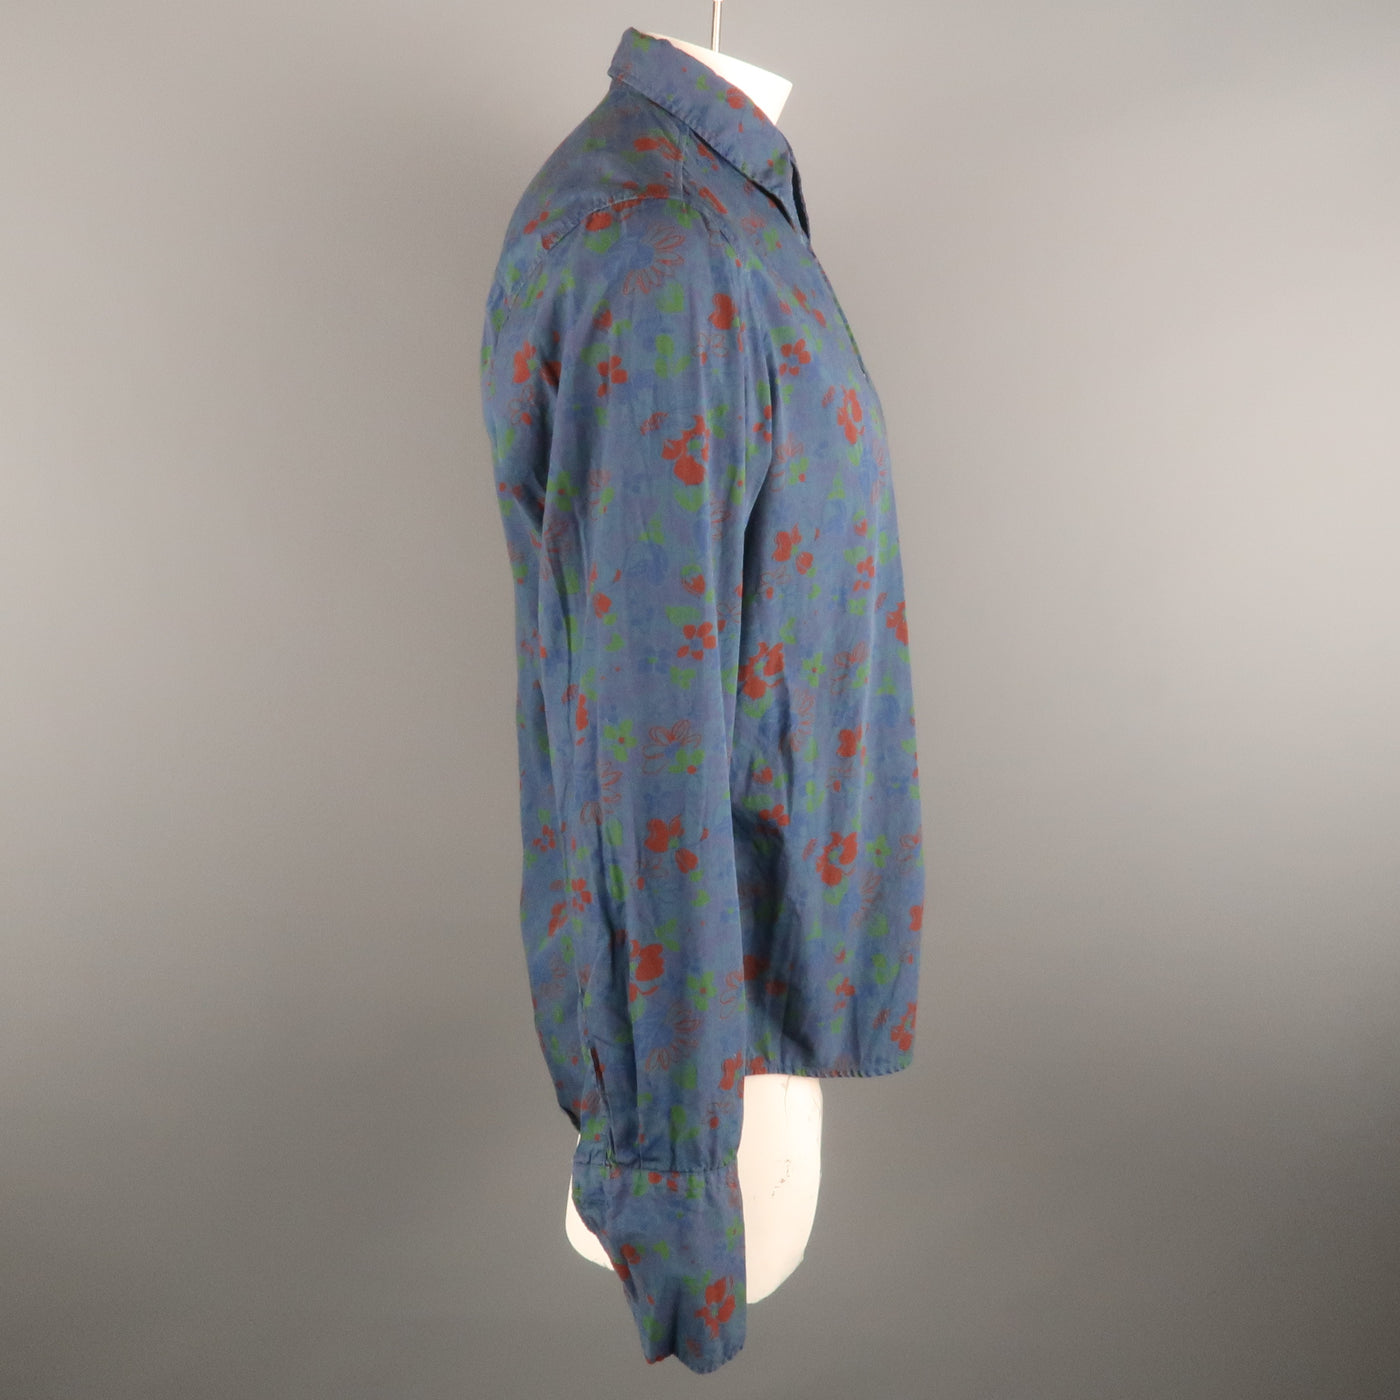 DRIES VAN NOTEN Size XL Navy & Brick Floral Cotton French Cuff Long Sleeve Shirt